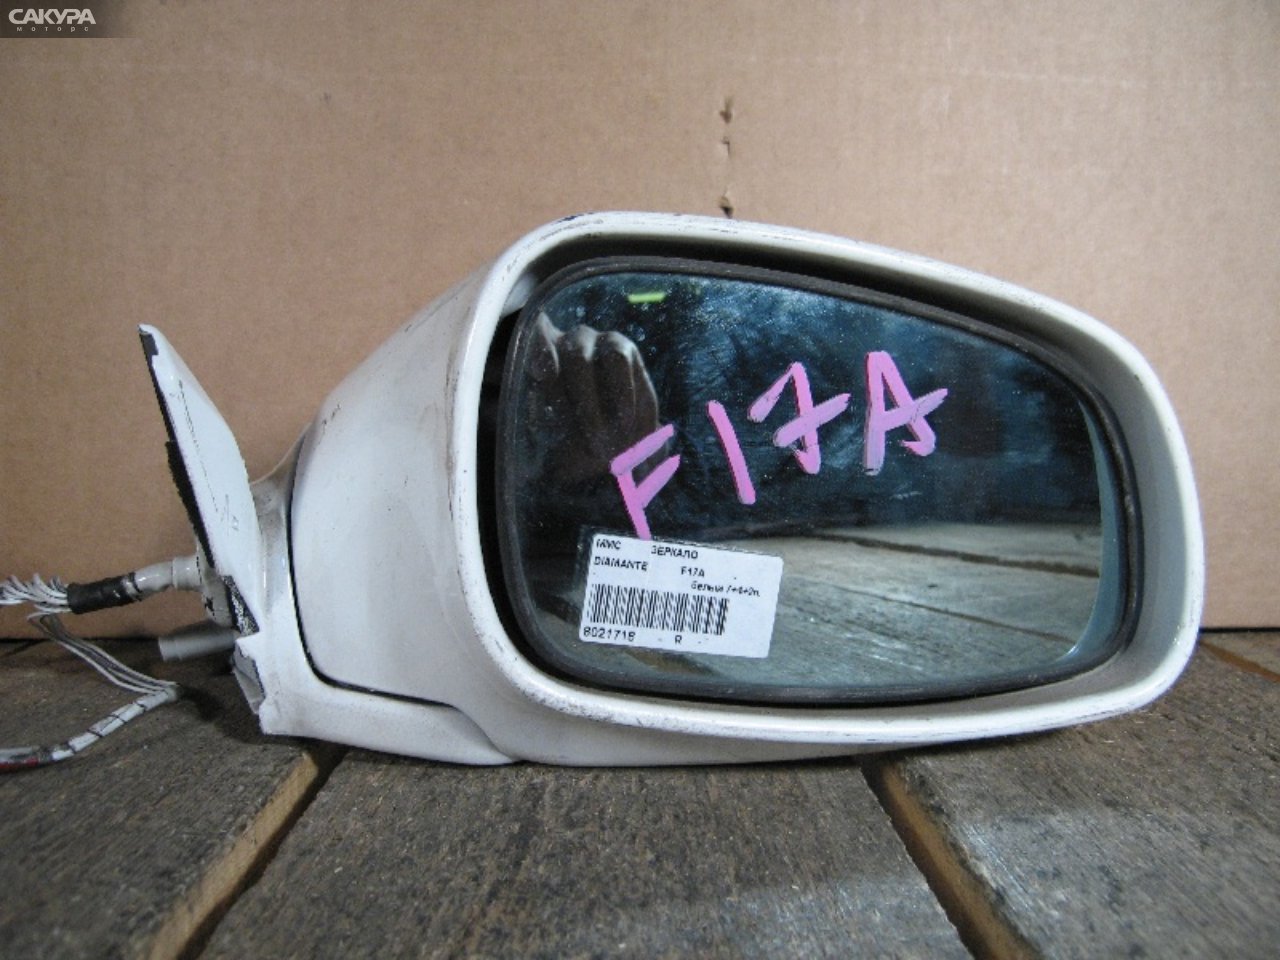 Зеркало боковое правое Mitsubishi Diamante F17A: купить в Сакура Абакан.